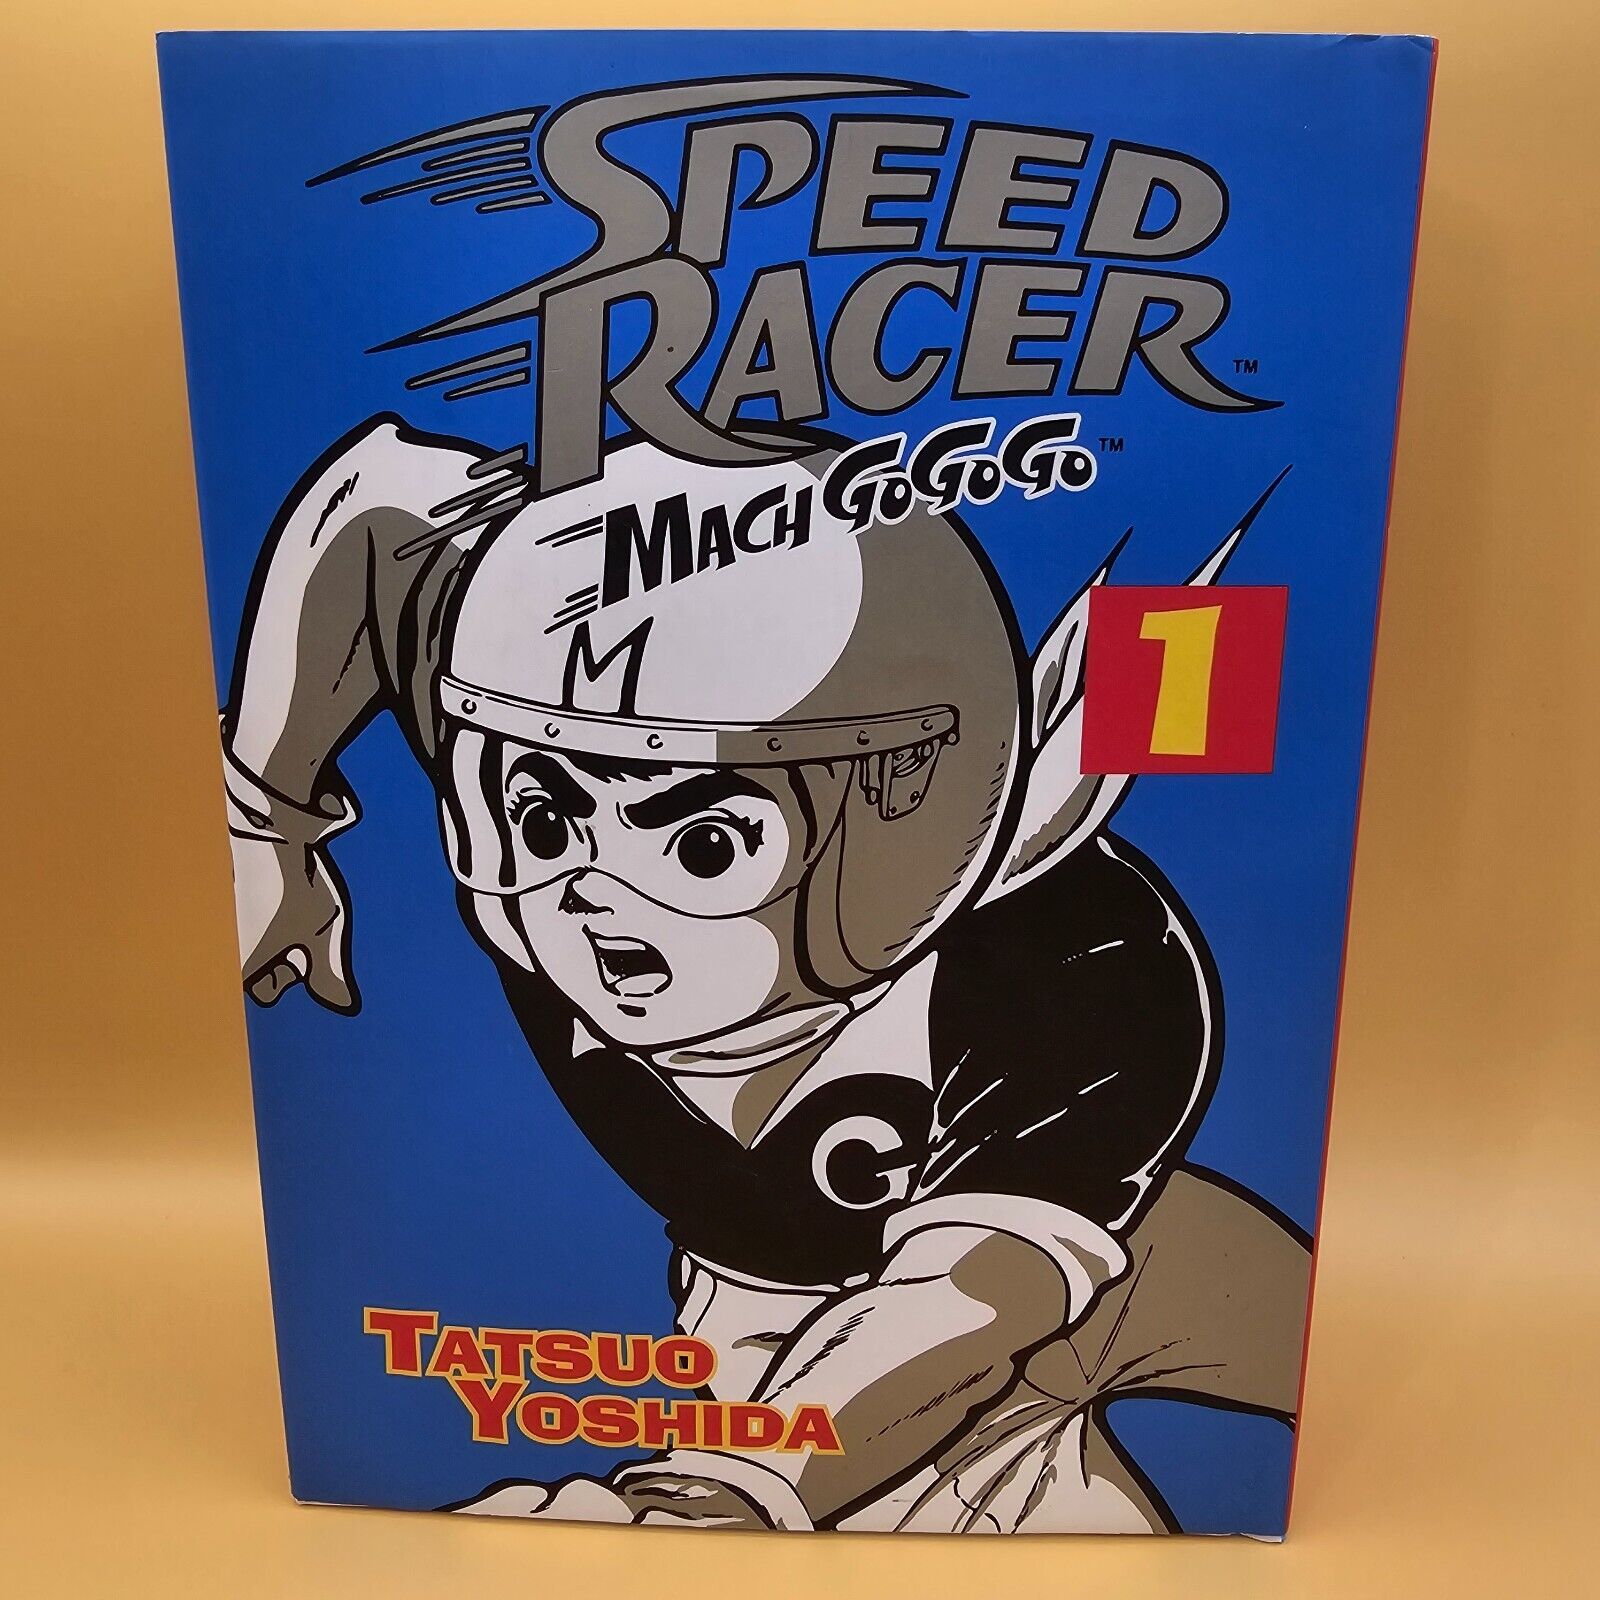 SPEED RACER MACH GO GO GO MANGA TATSUO YOSHIDA BOOK 1